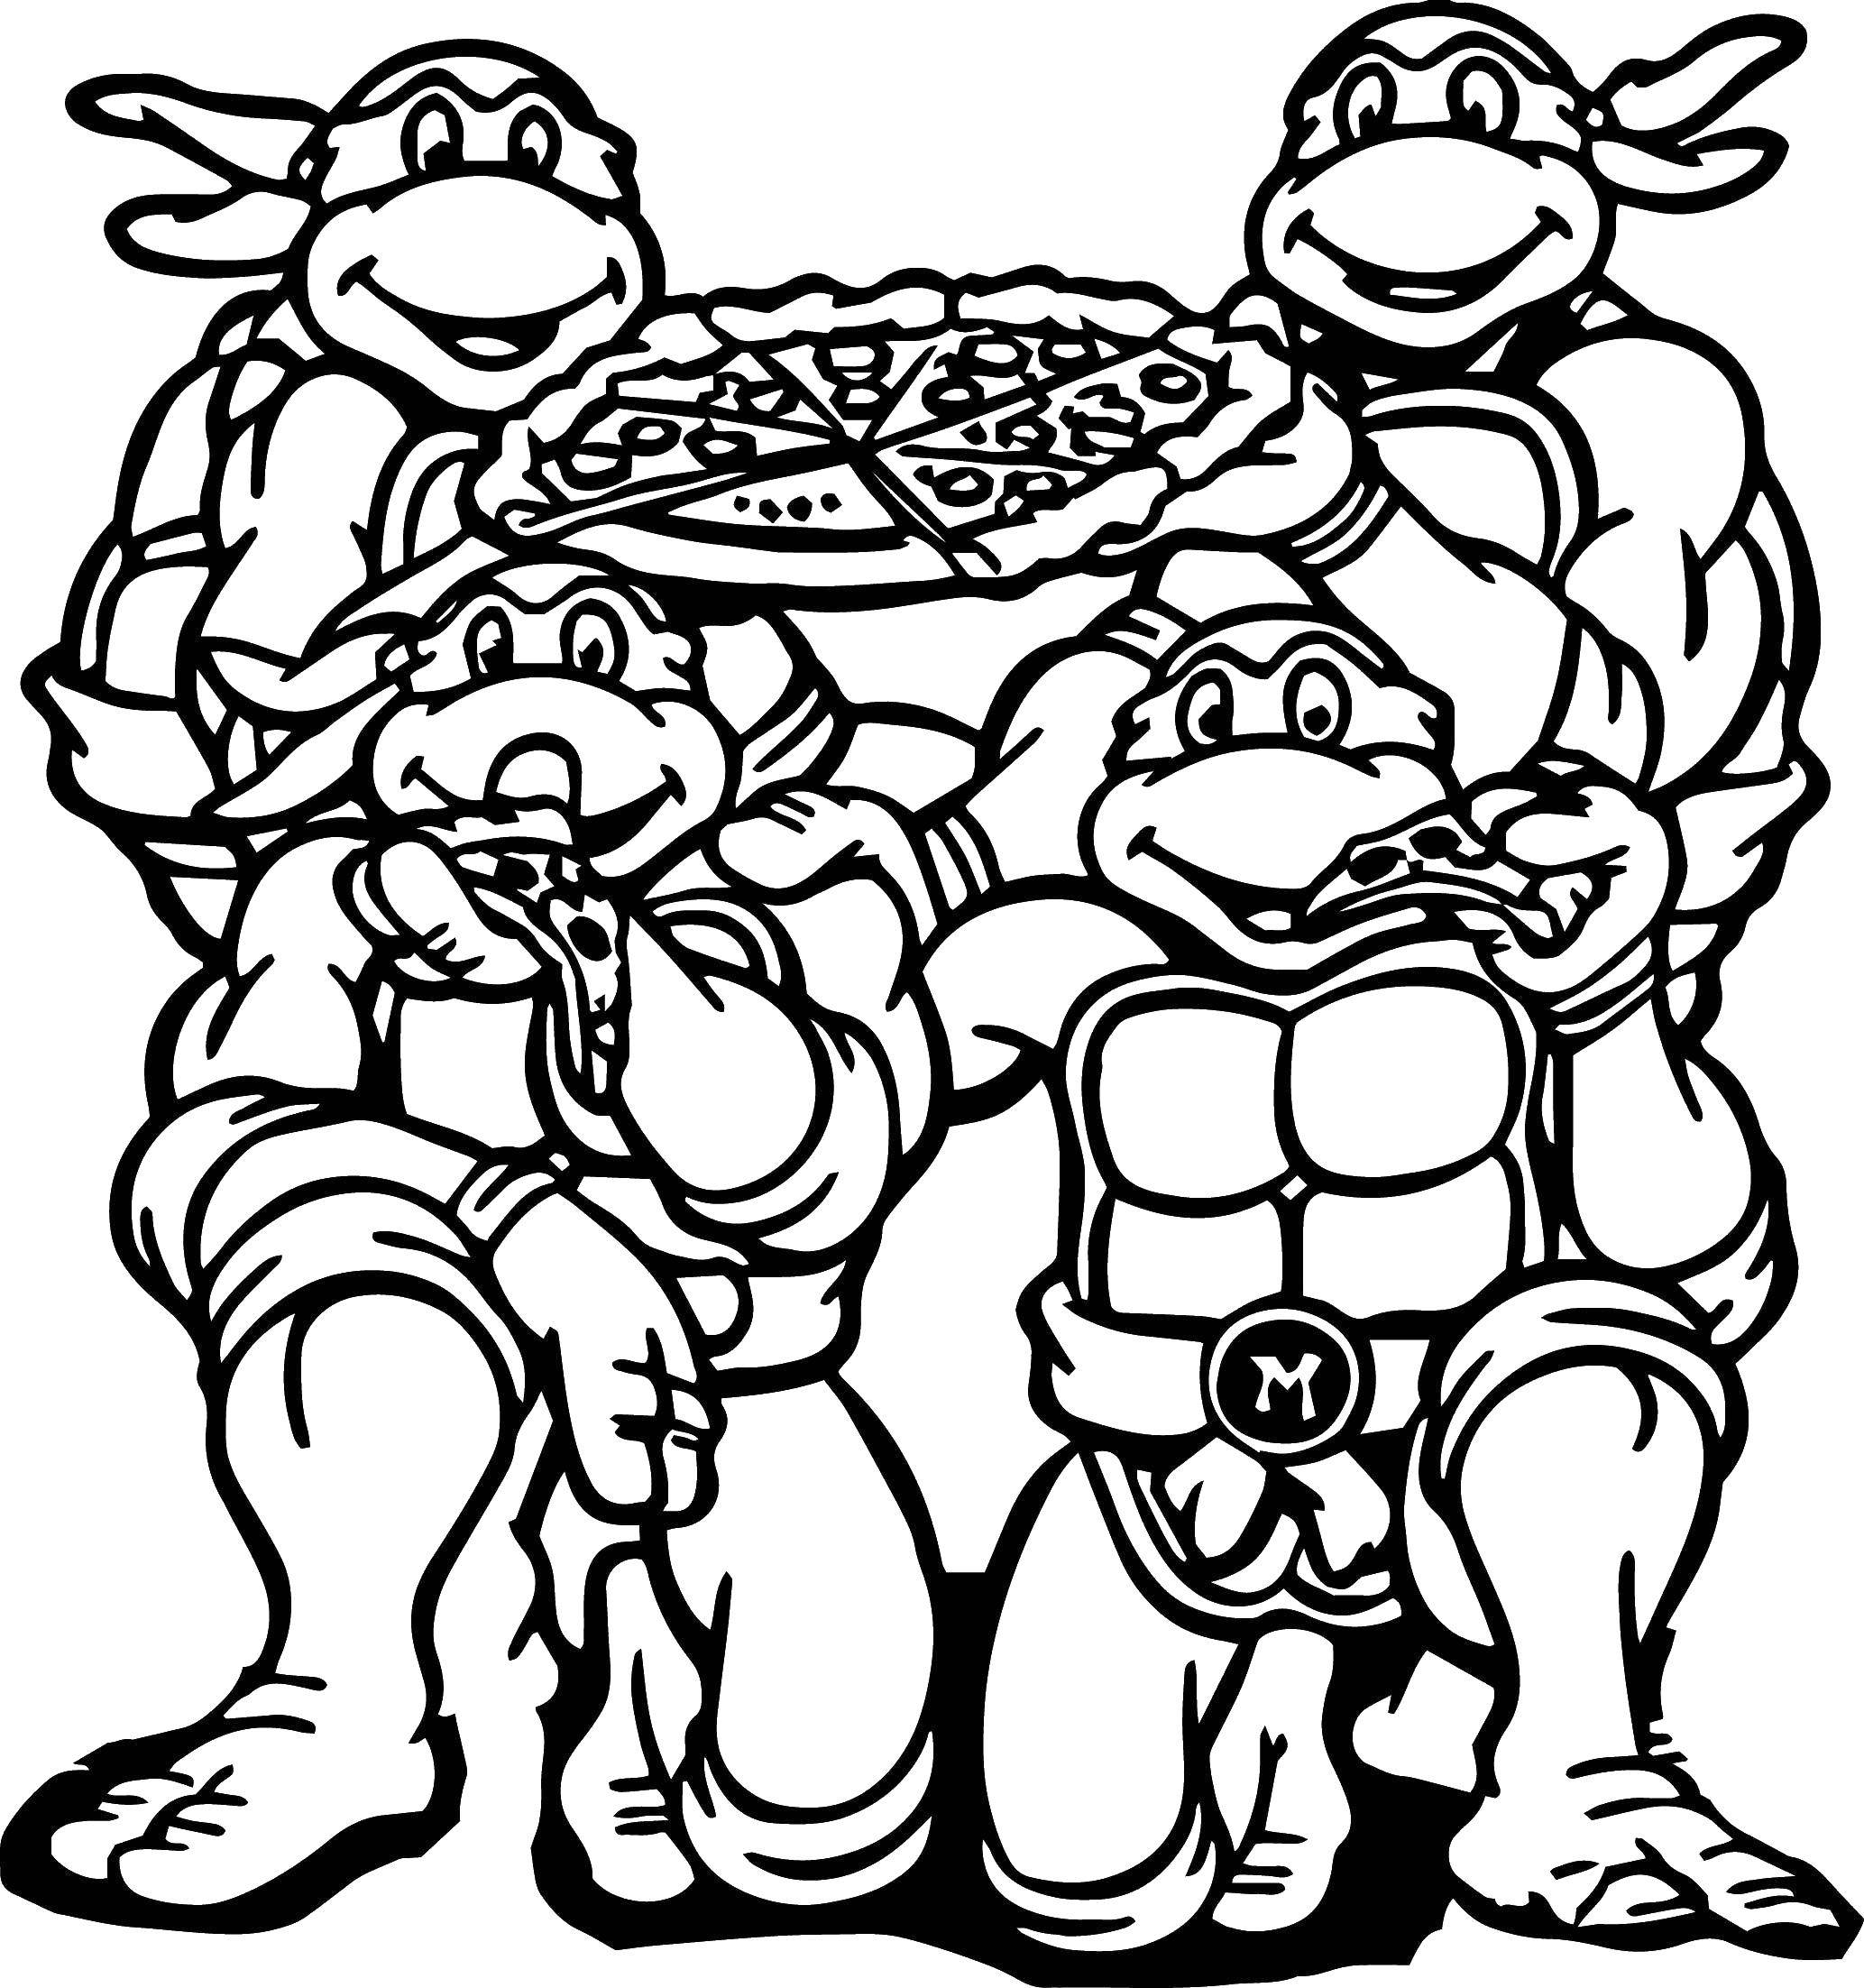 Название: Раскраска Черепашки ниндзя с пиццей. Категория: черепашки ниндзя. Теги: черепашки ниндзя, пицца.